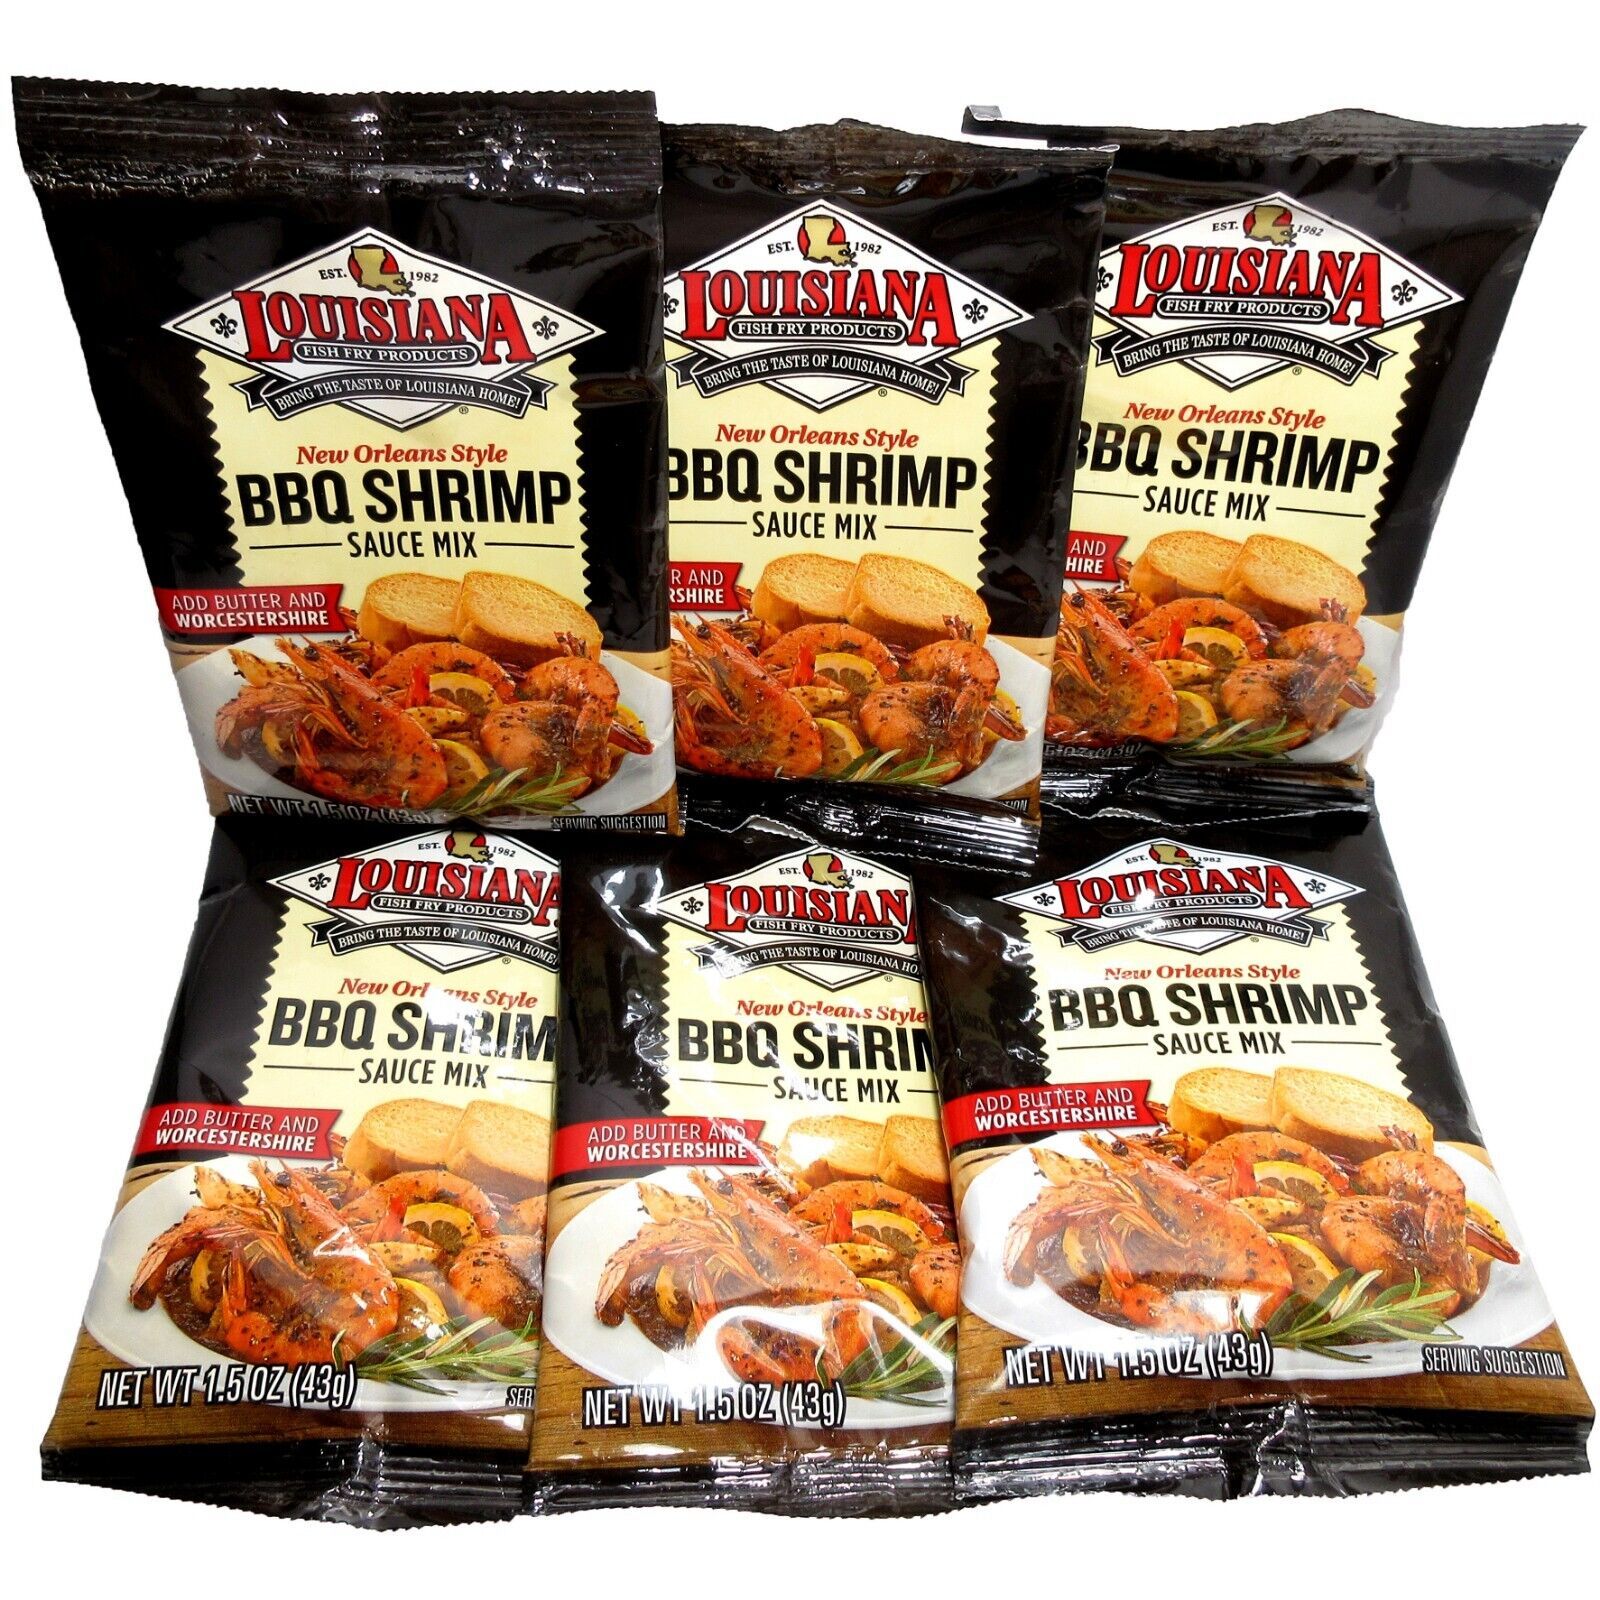 (6) Louisiana Fish Fry New Orleans Style BBQ Shrimp Sauce Mix - 1.5 oz each - $19.95